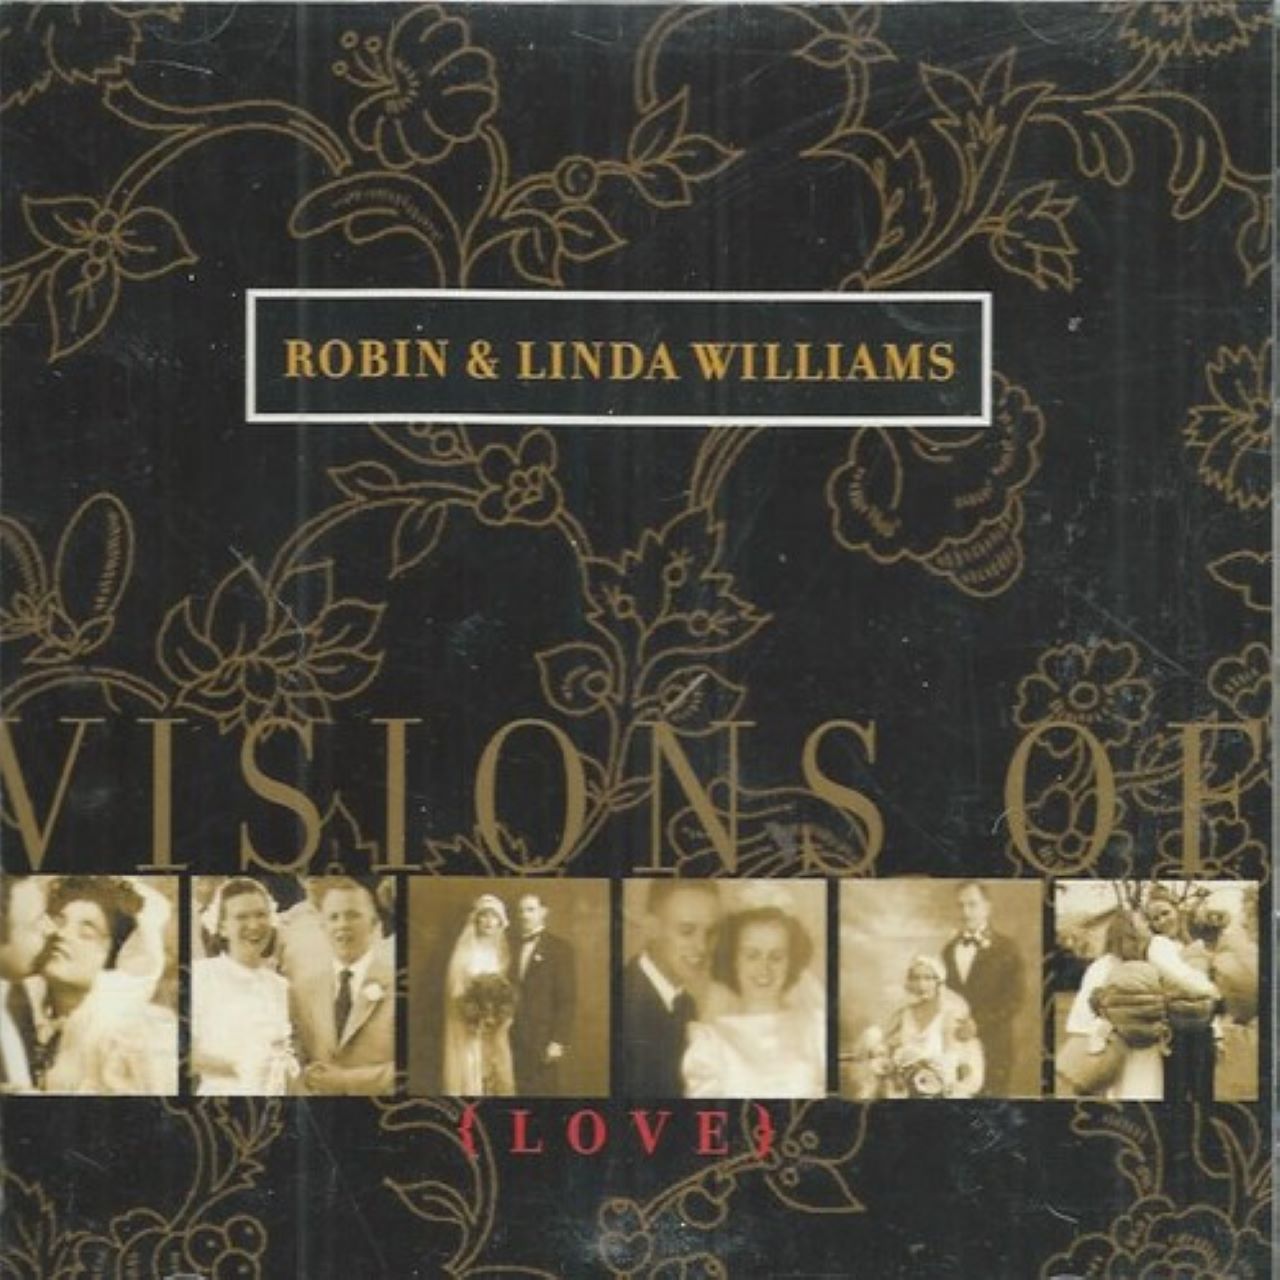 Robin & Linda Williams - Visions Of Love cover album